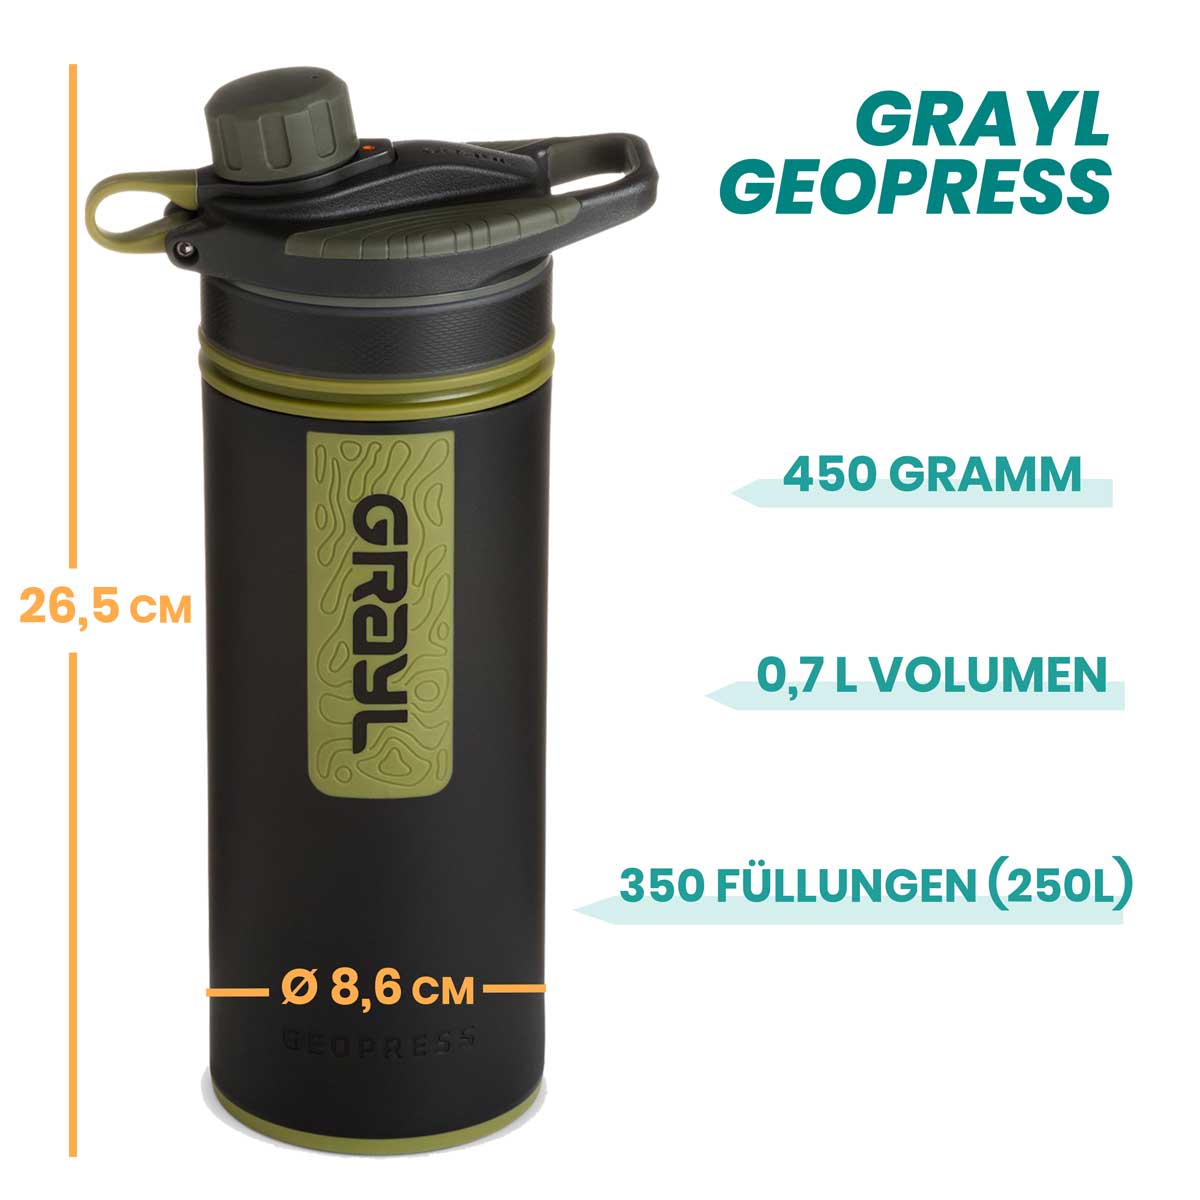 Grayl Geopress Eigenschaften